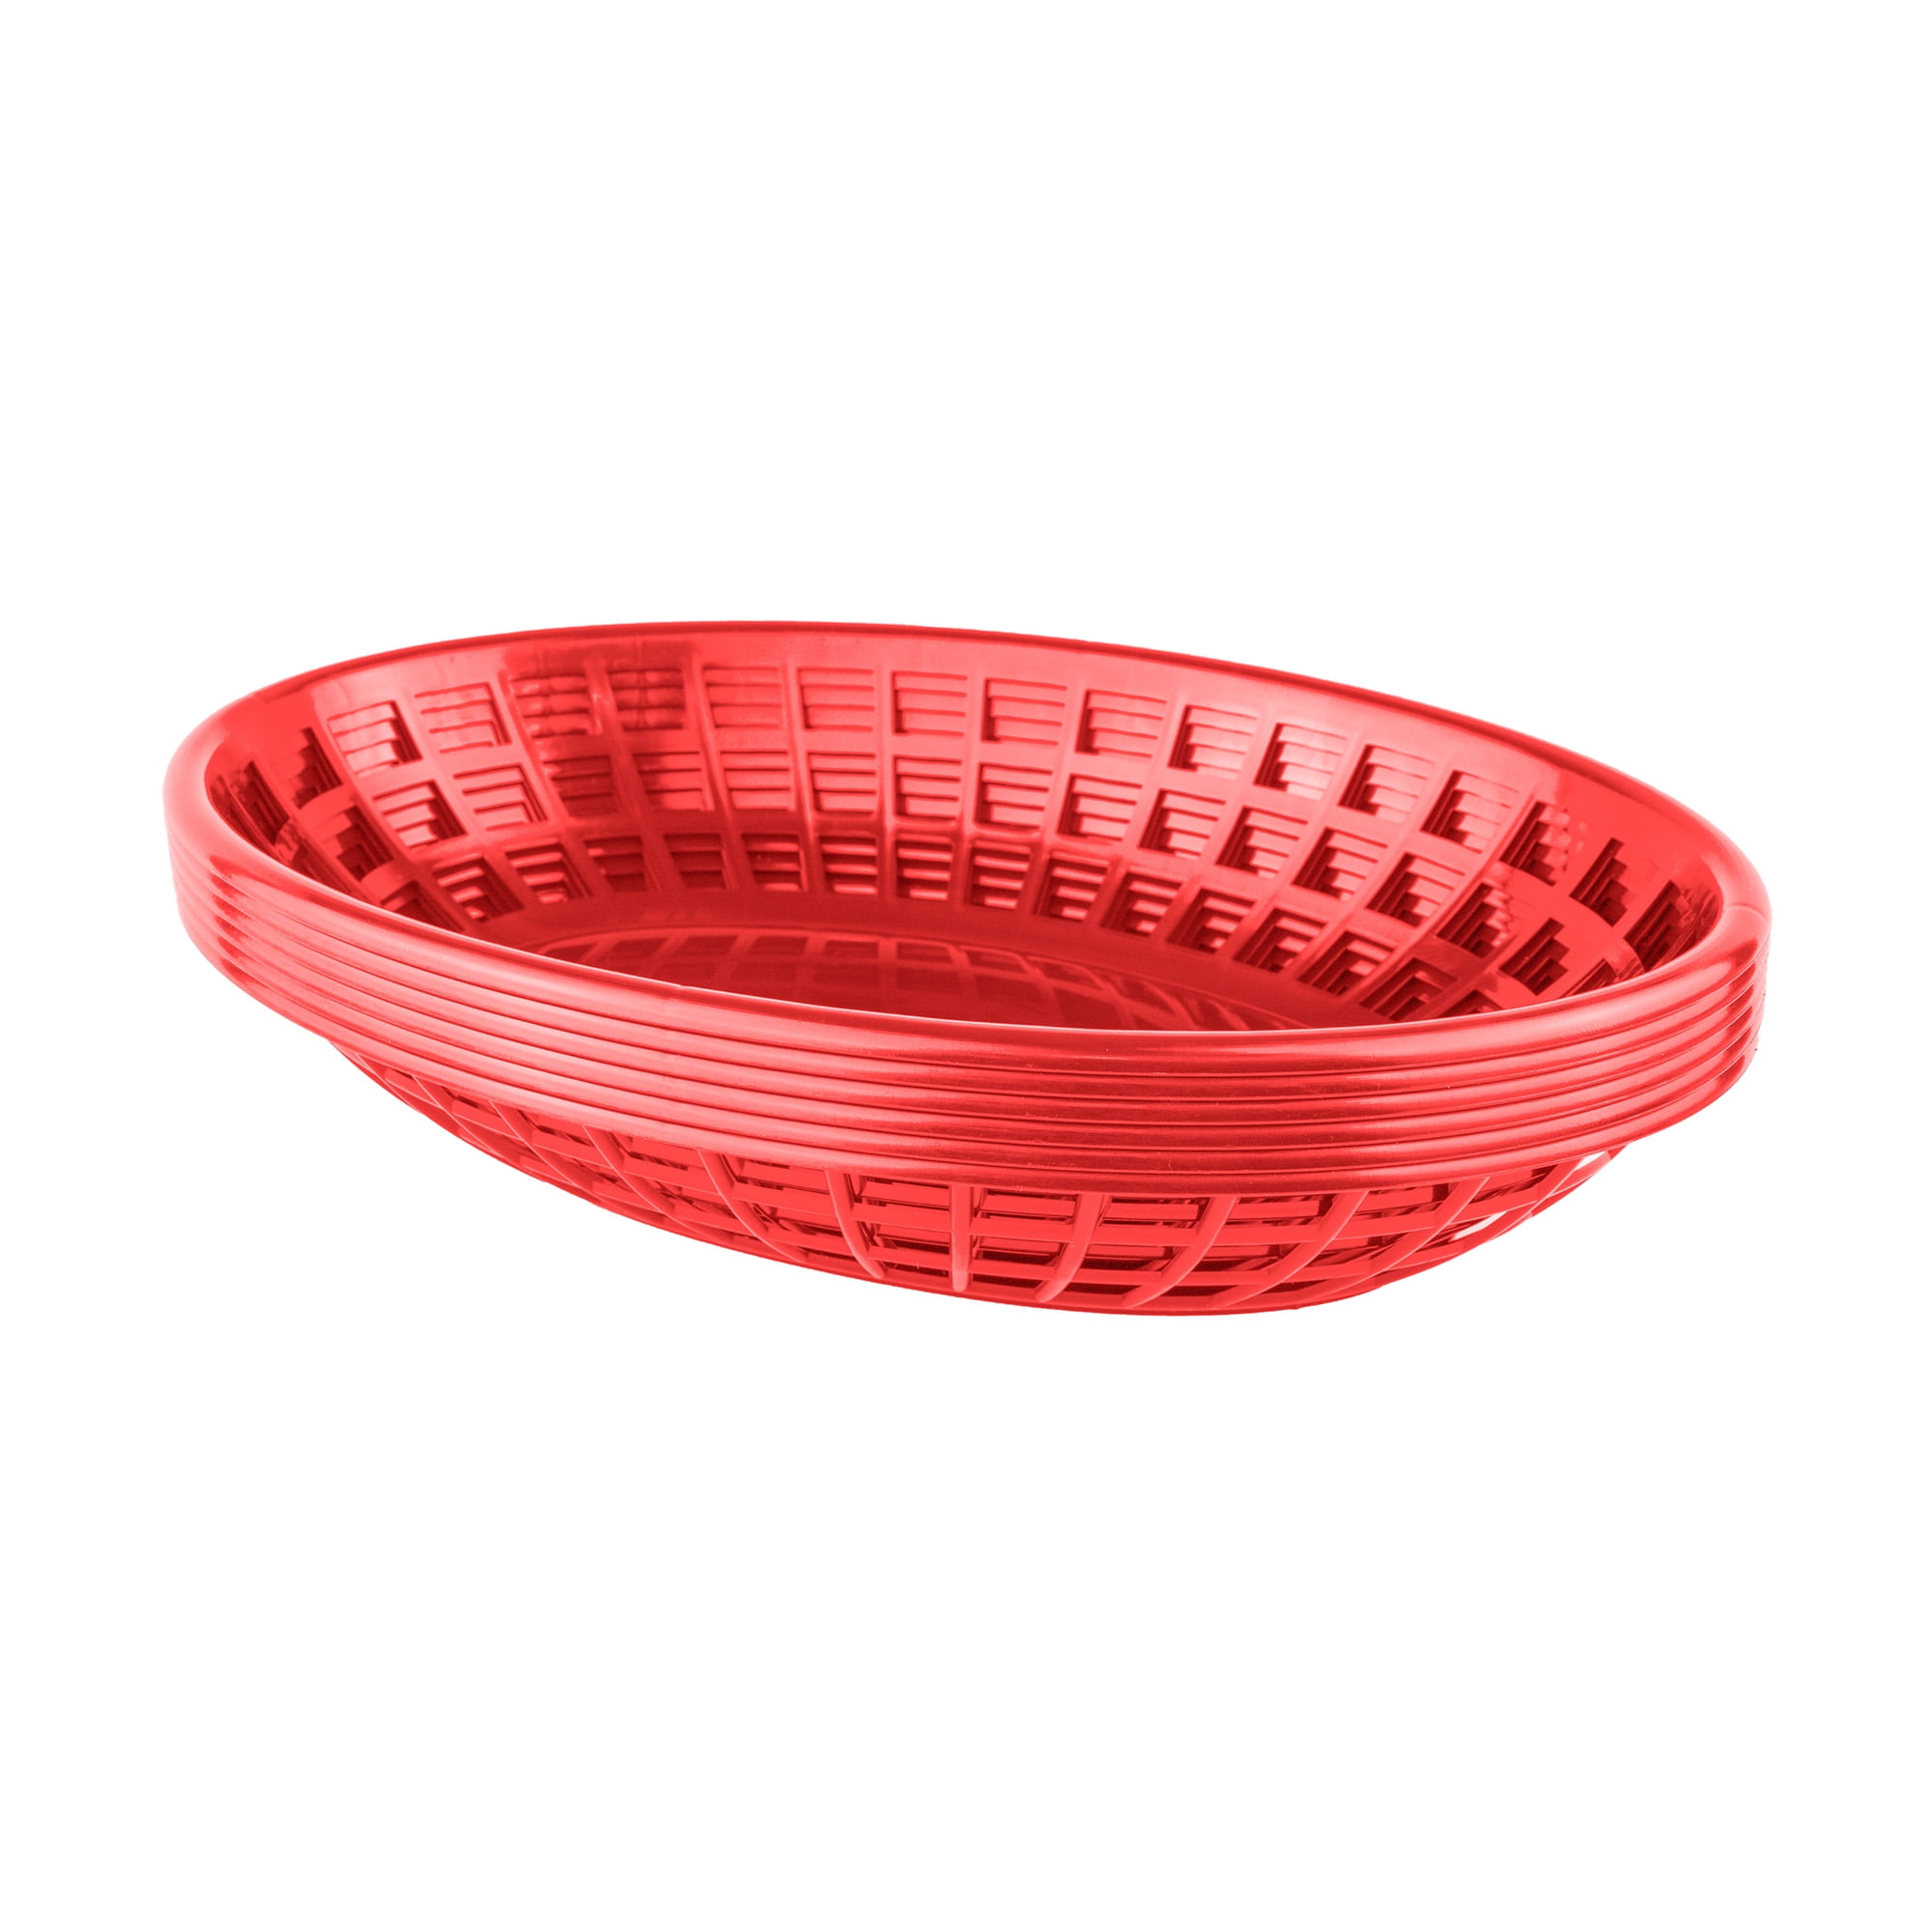 Hot Dog Burger Fries Set of 8 Red / Black Plastic Baskets: Deli Onion Rings 